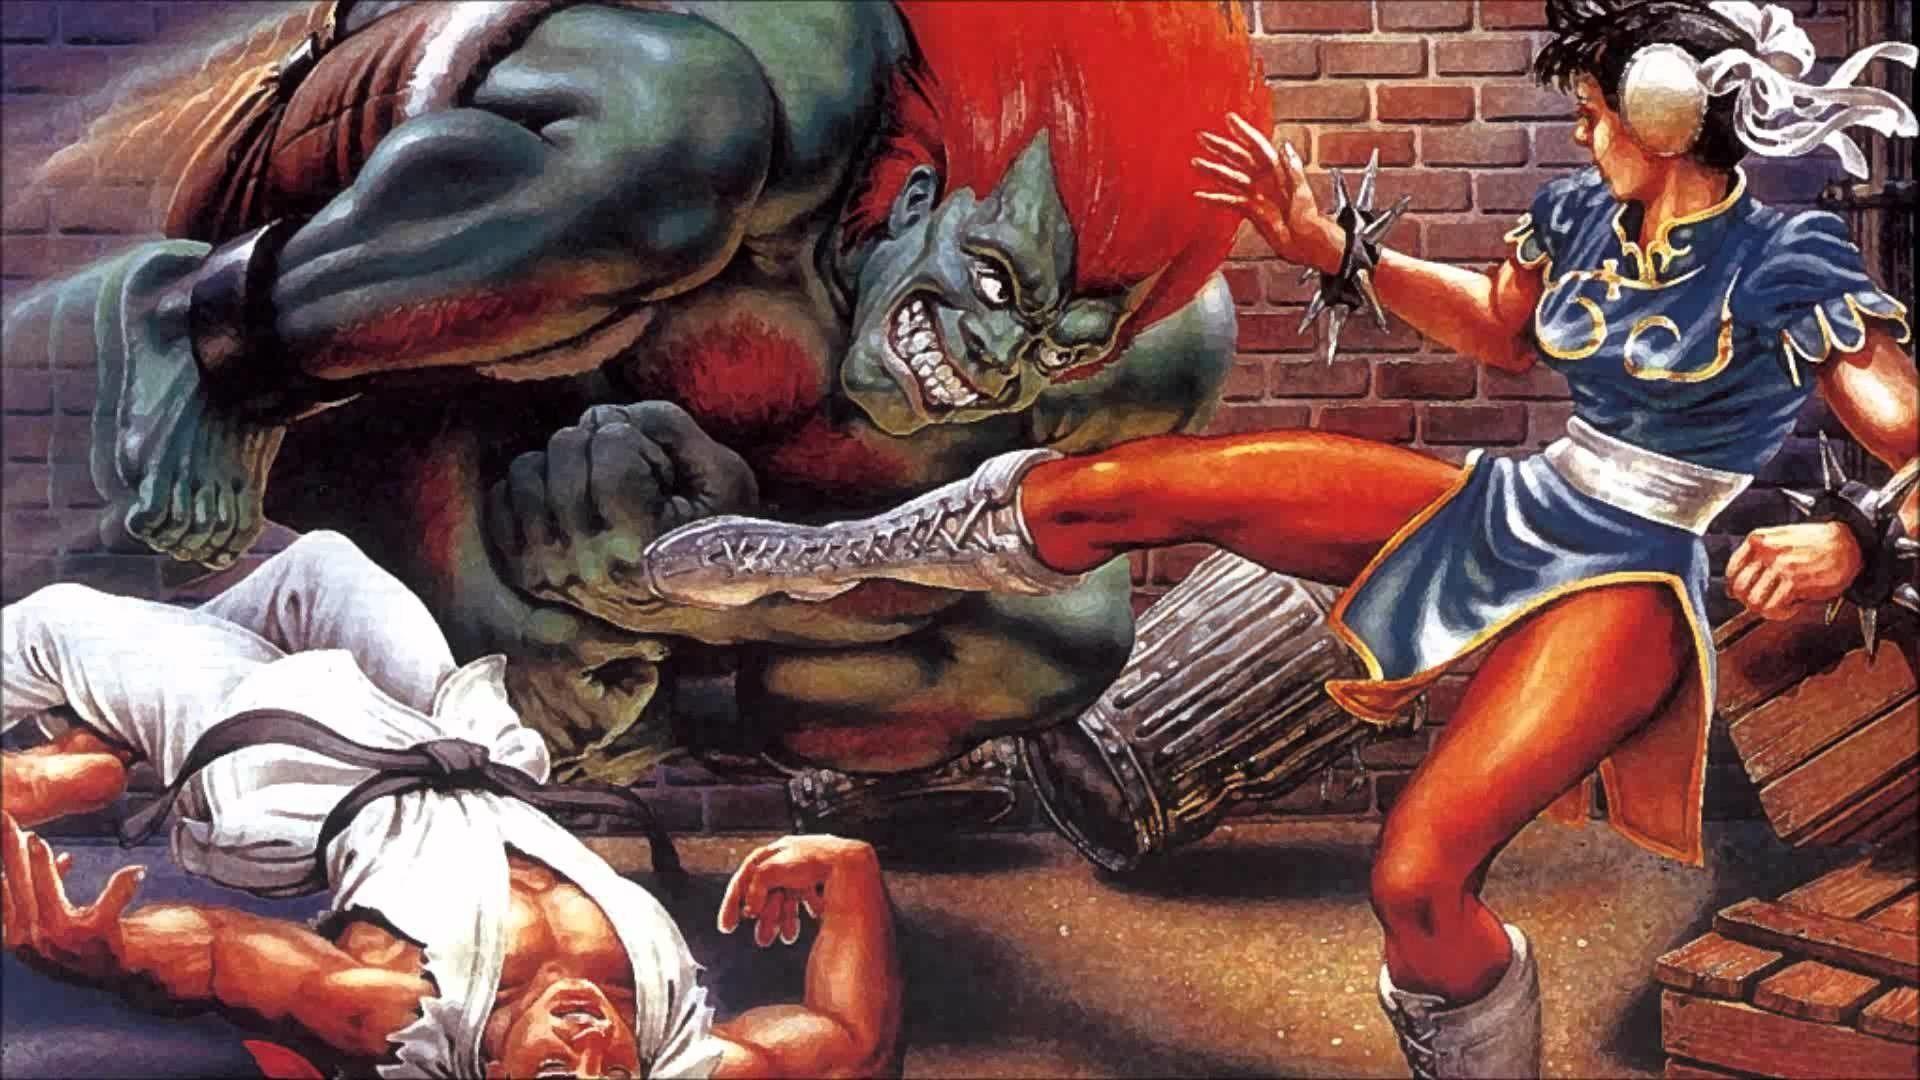 Street Fighter 2 V Wallpapers Wallpaper Cave